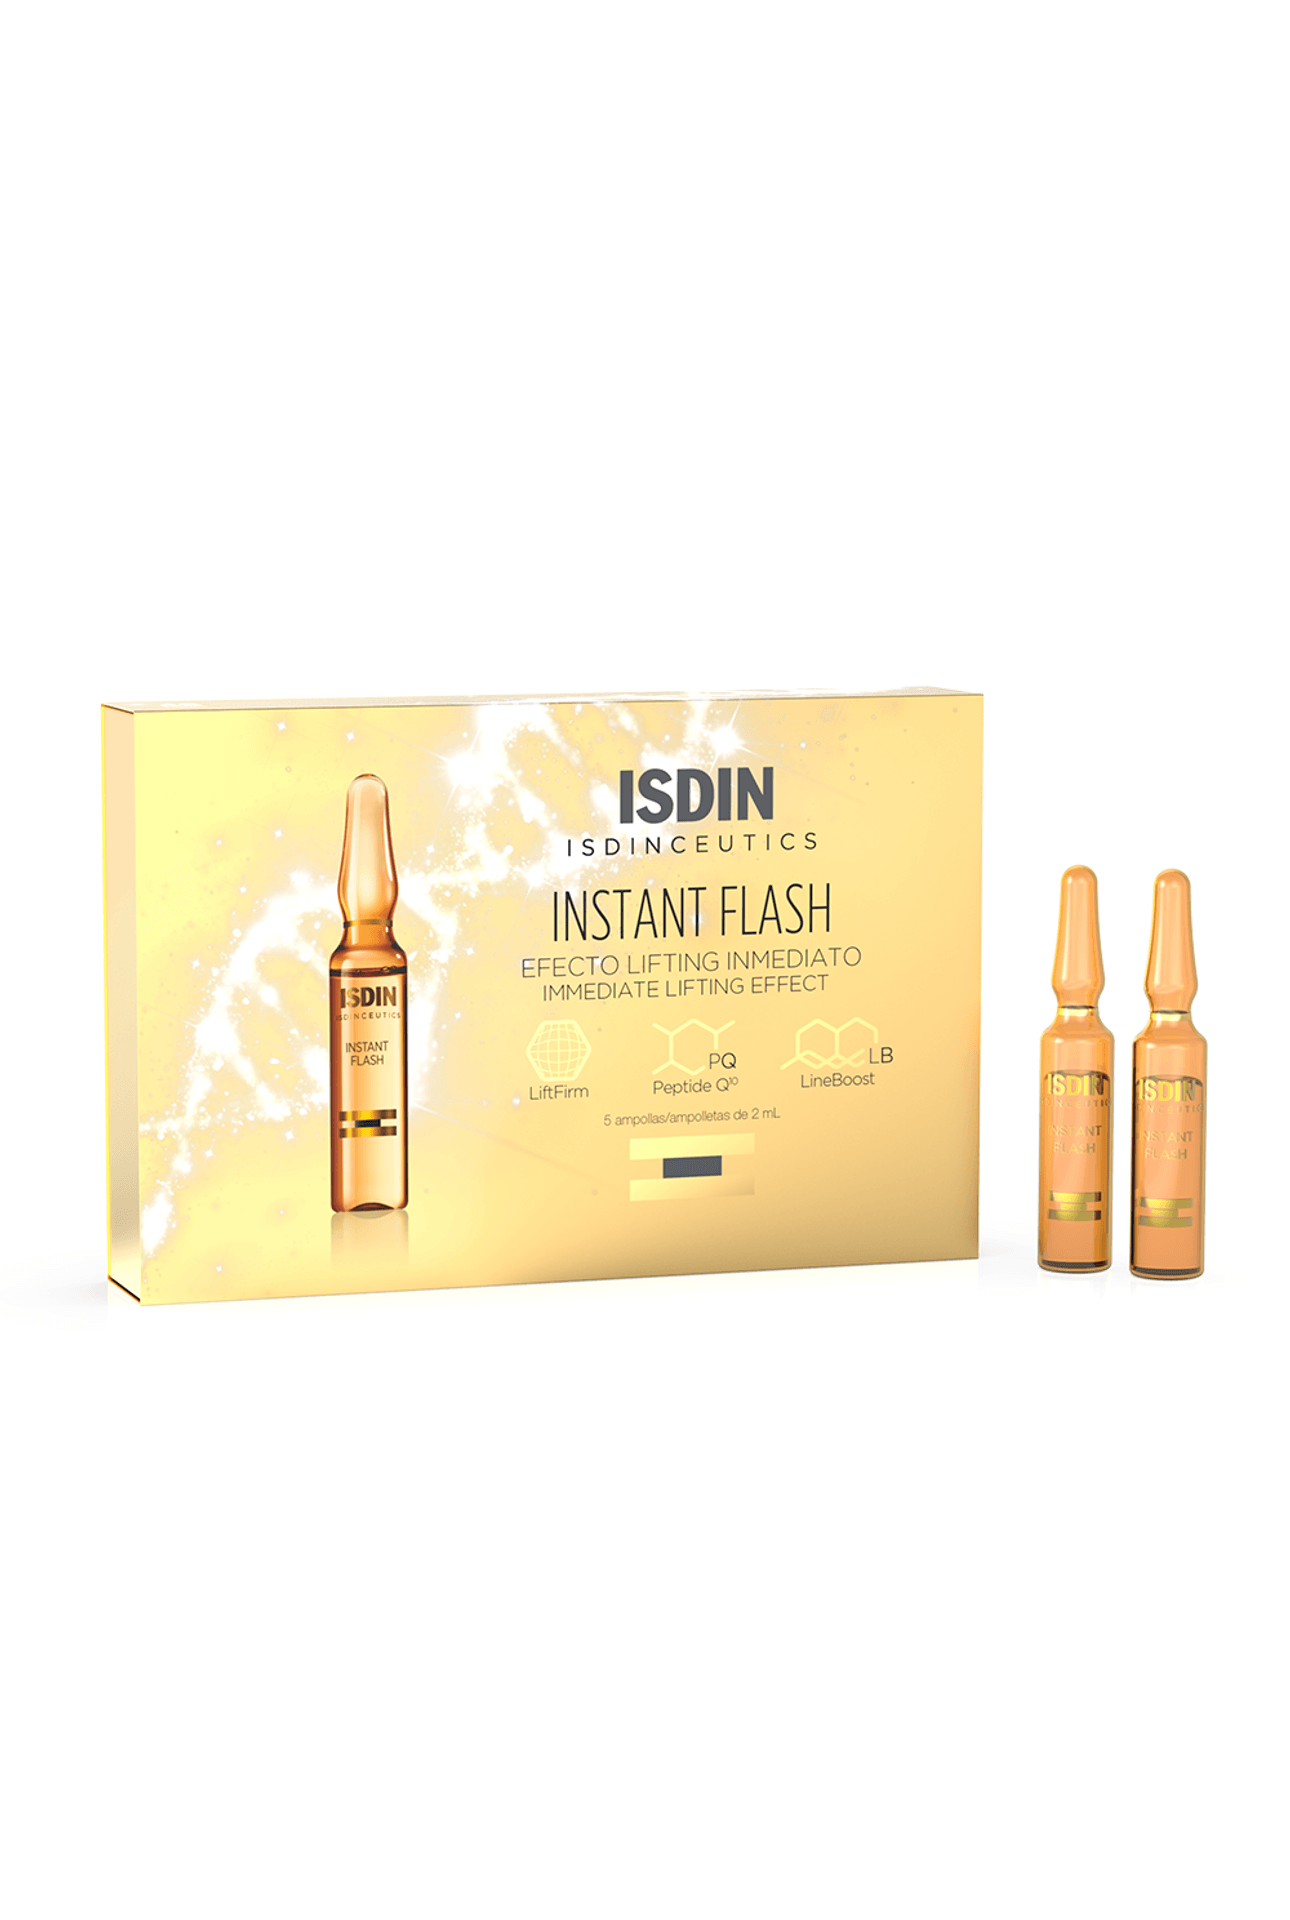 Isdin-Isdinceutics Instant Flash Ampollas x 5 unid-8429420165472